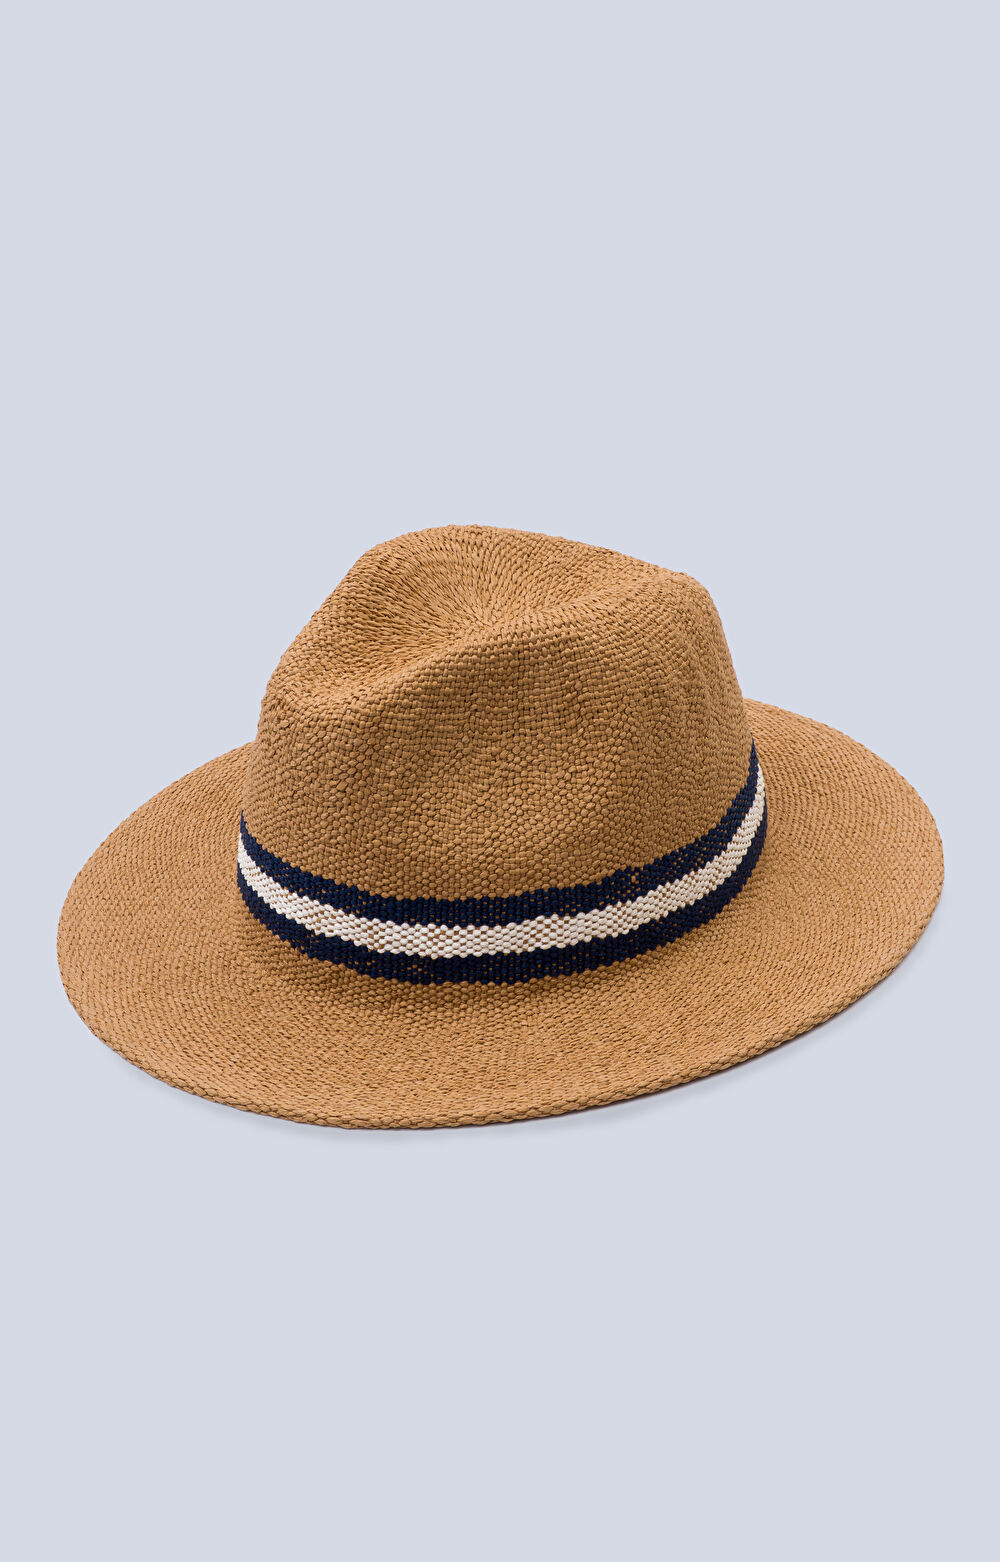 Słomkowy kapelusz